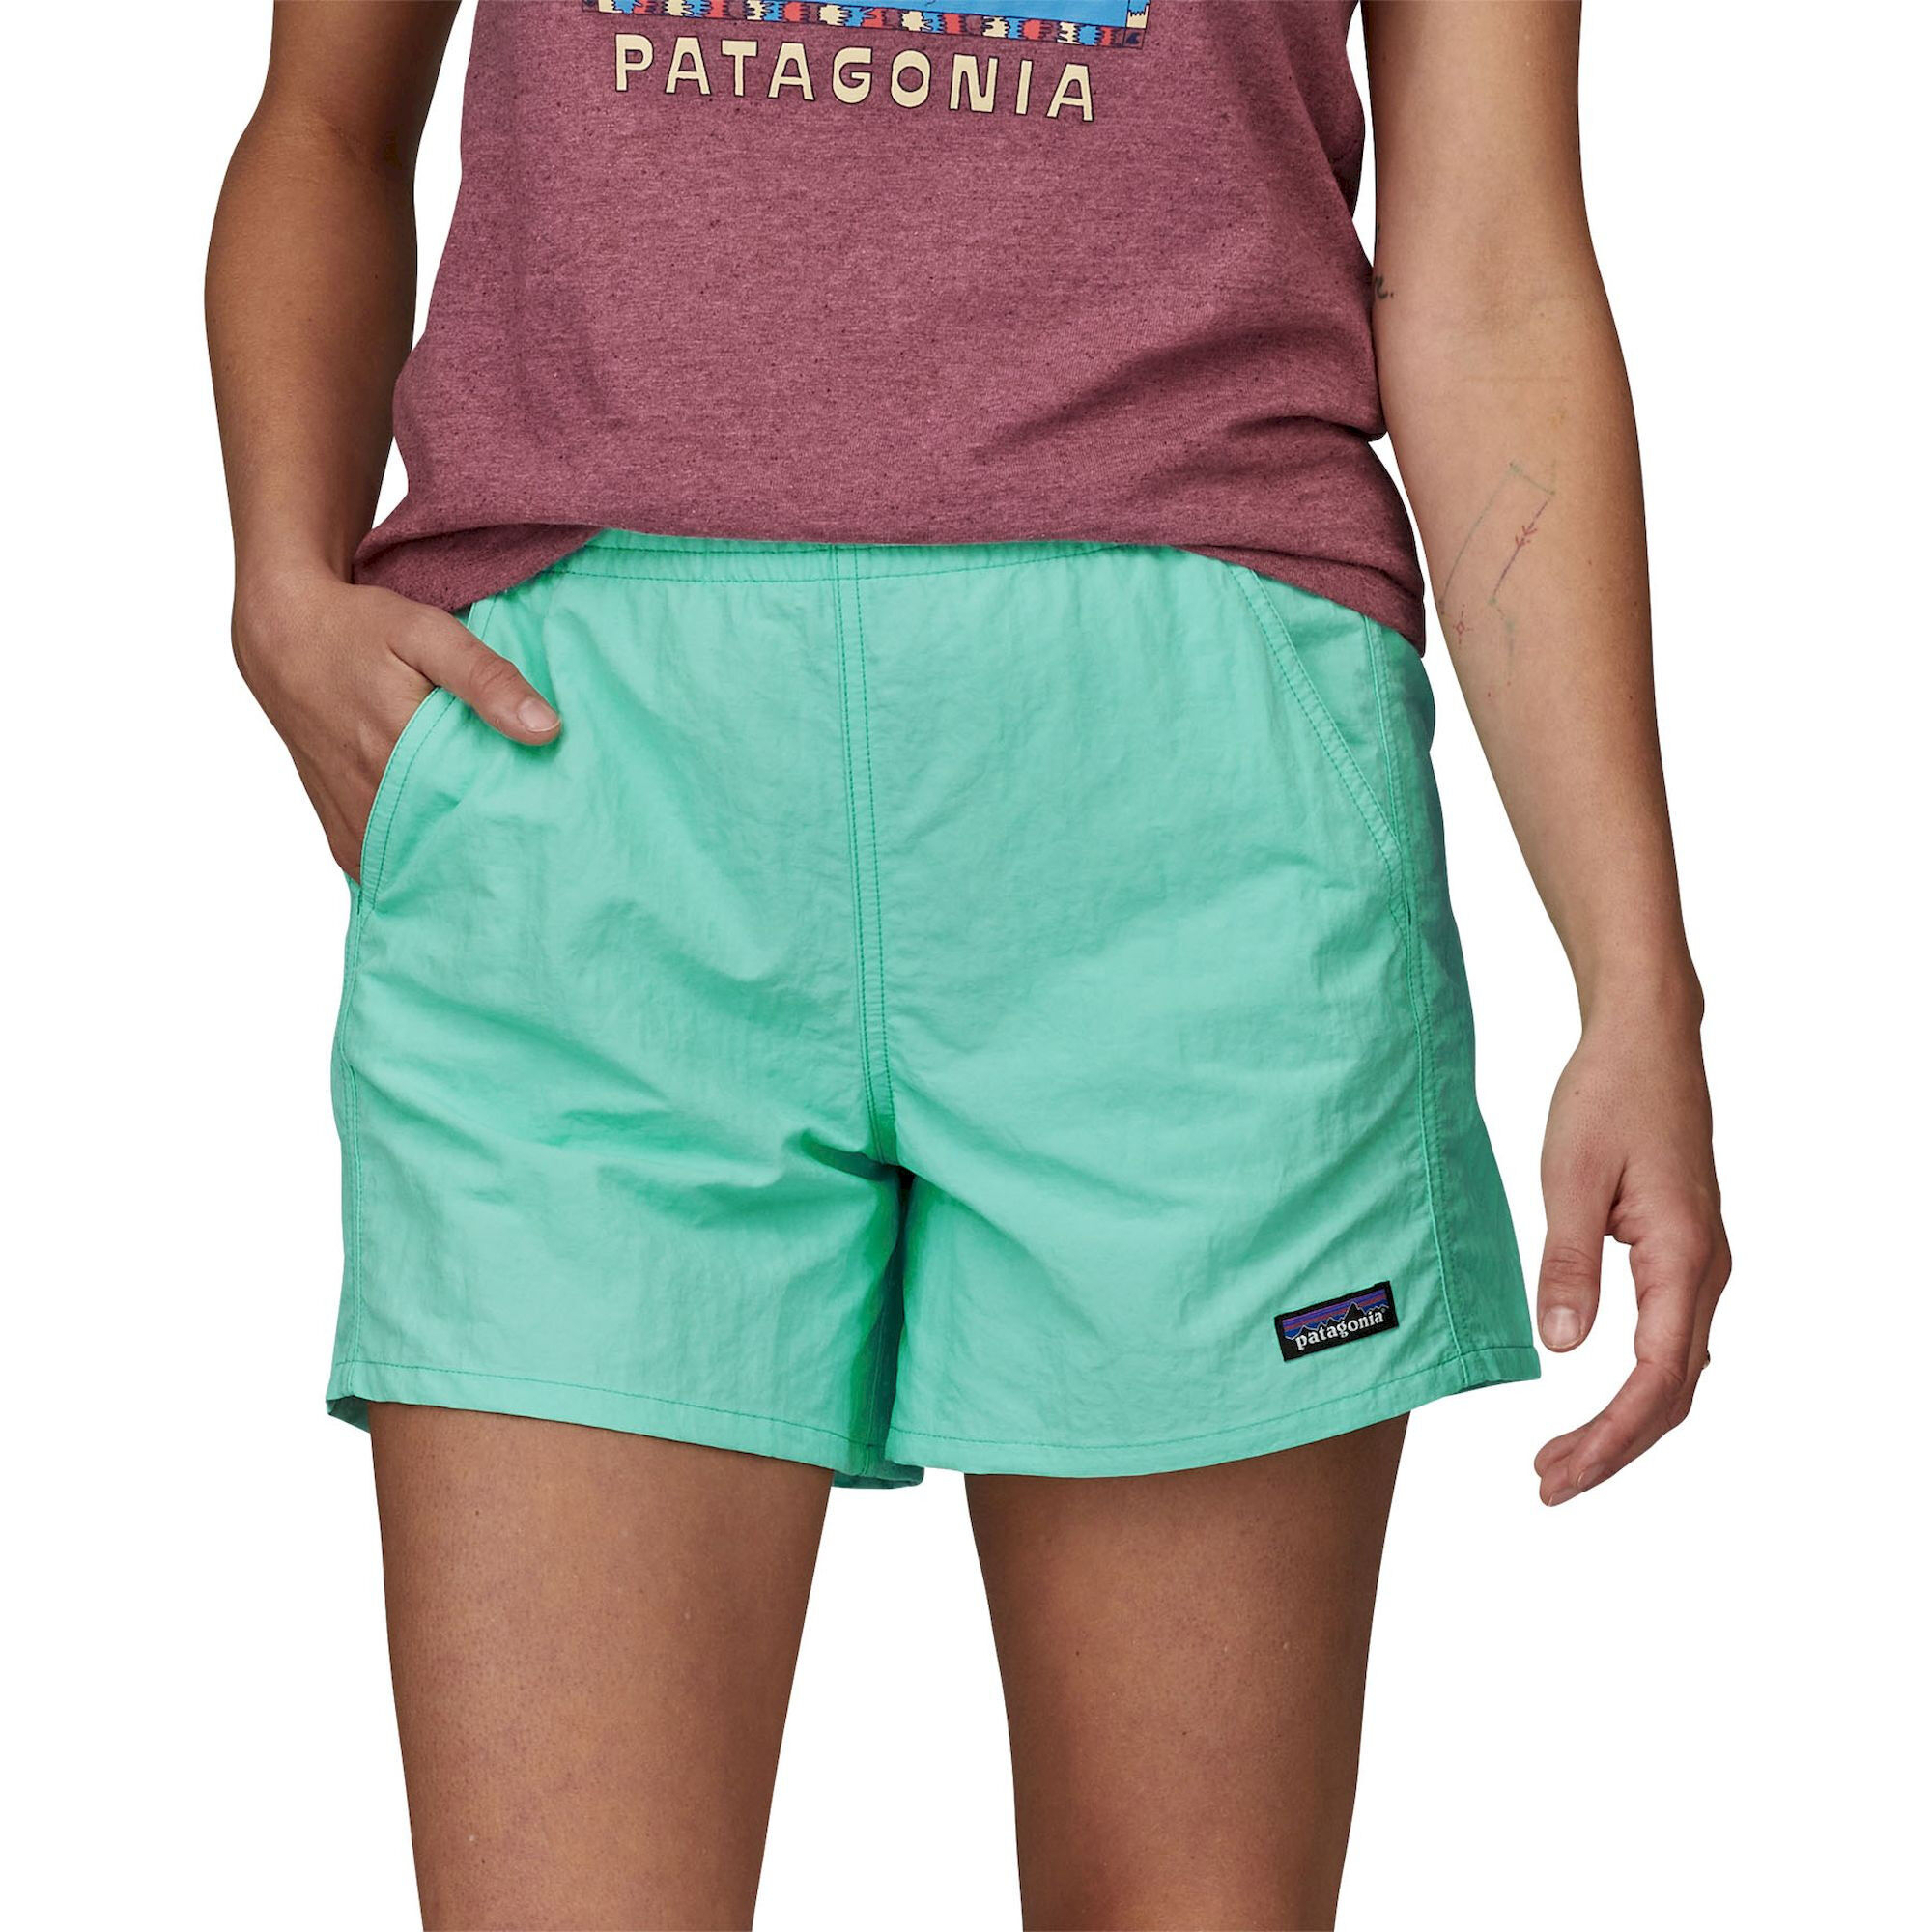 Patagonia Baggies Shorts 5 in. - Pantalones cortos - Mujer